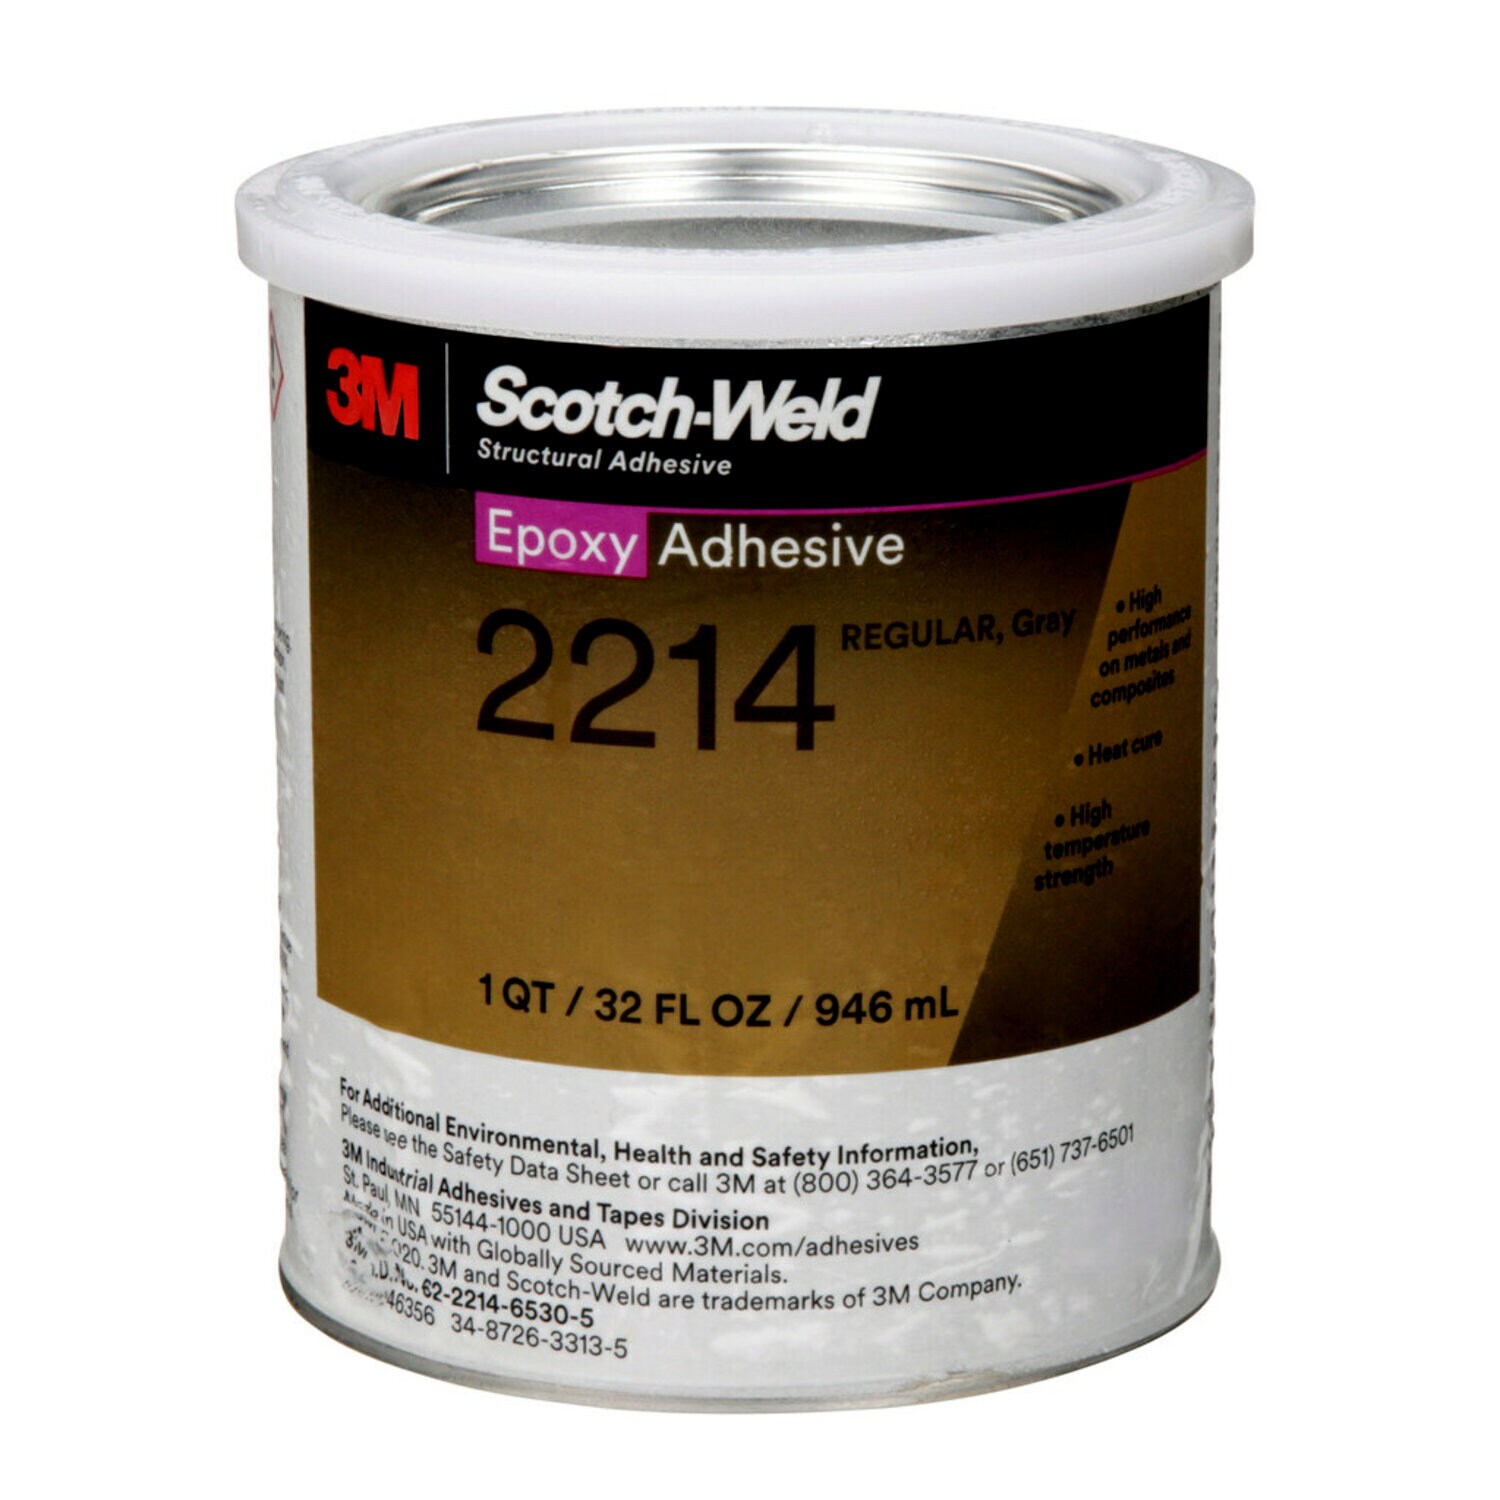 7000046356 - 3M Scotch-Weld Epoxy Adhesive 2214, Regular, Gray, 1 Quart, 2 Can/Case